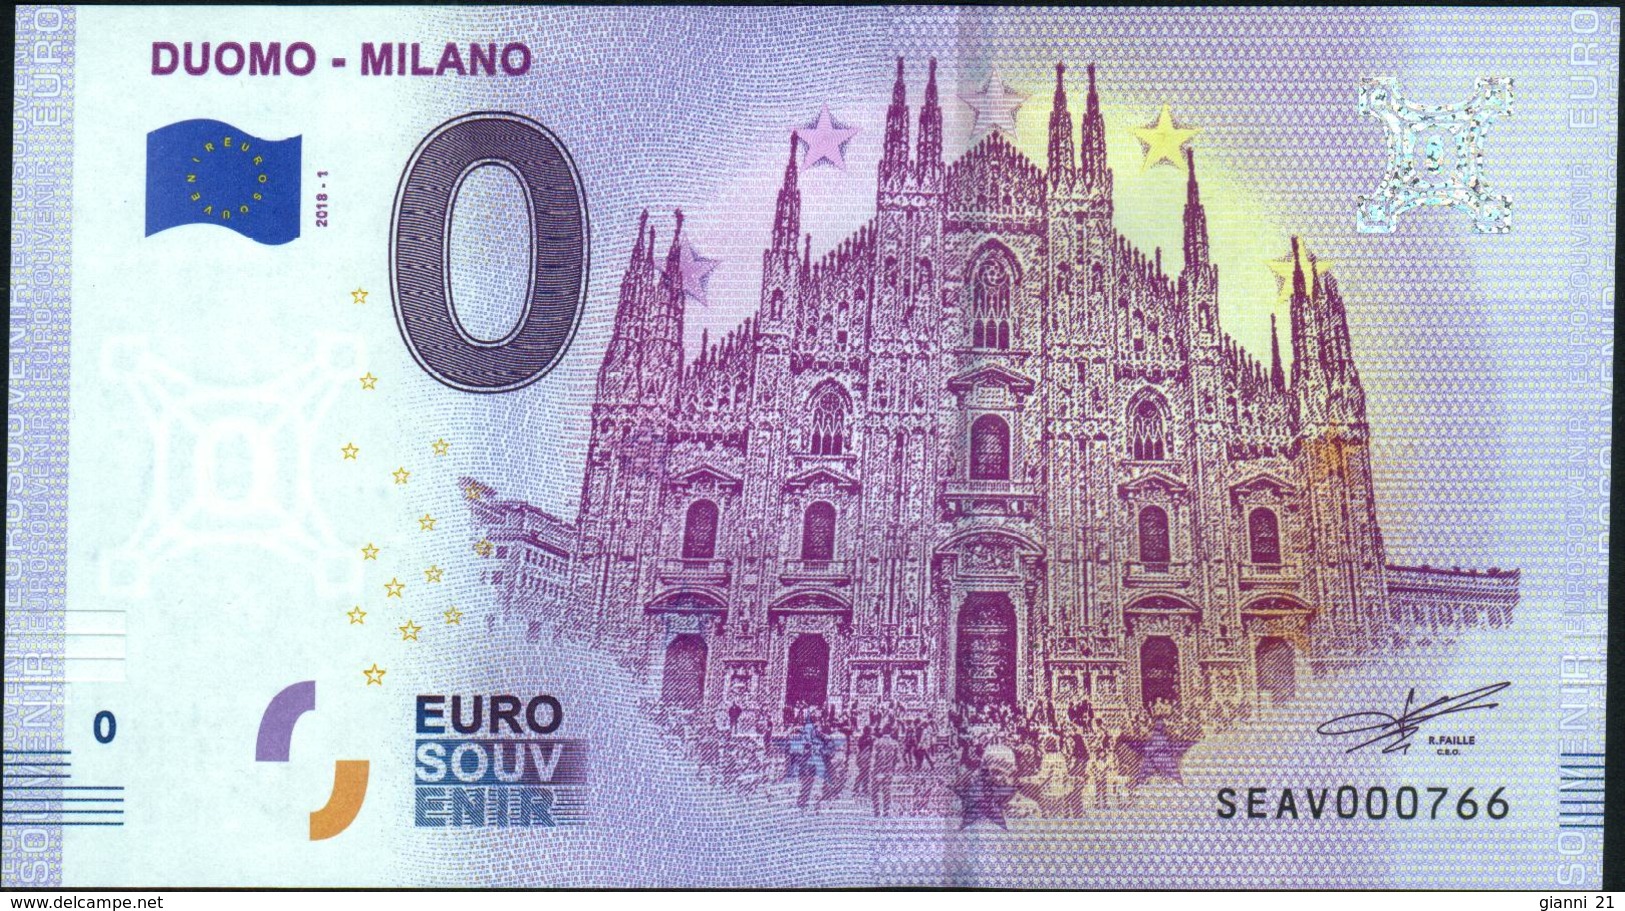 Zero - BILLET EURO O Souvenir - DUOMO - MILANO 2018-1set UNC {Italy} - Privatentwürfe